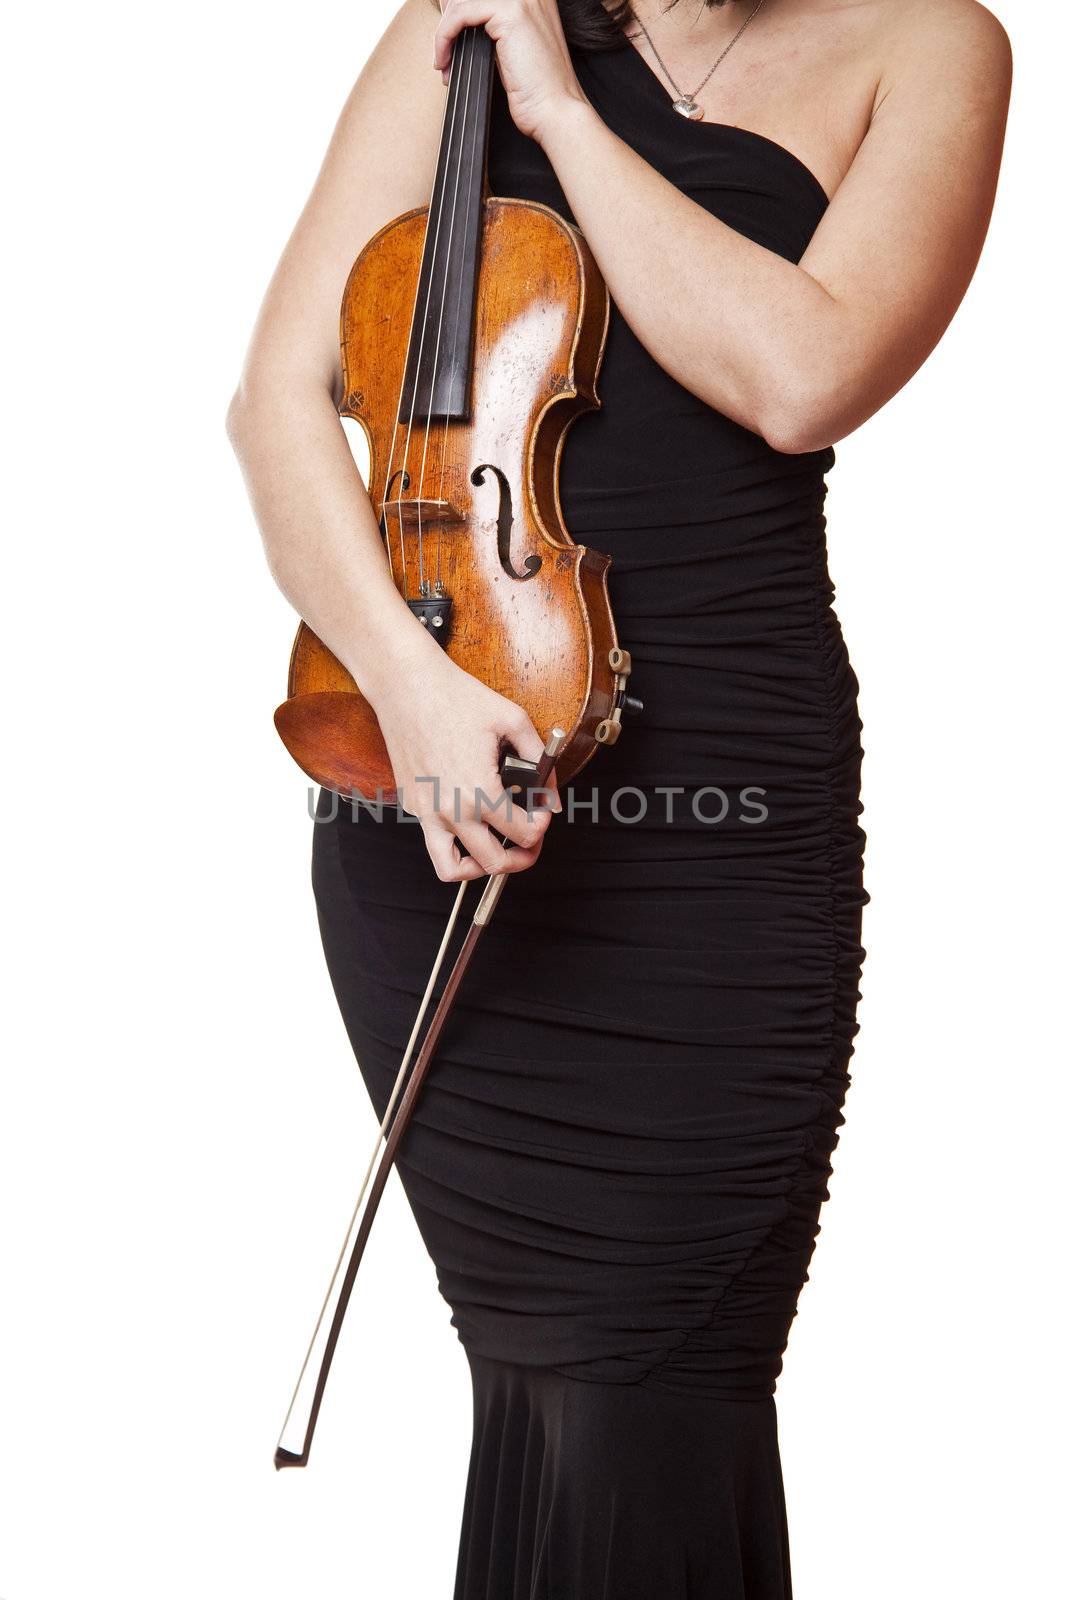 Violin In Hands by adamr